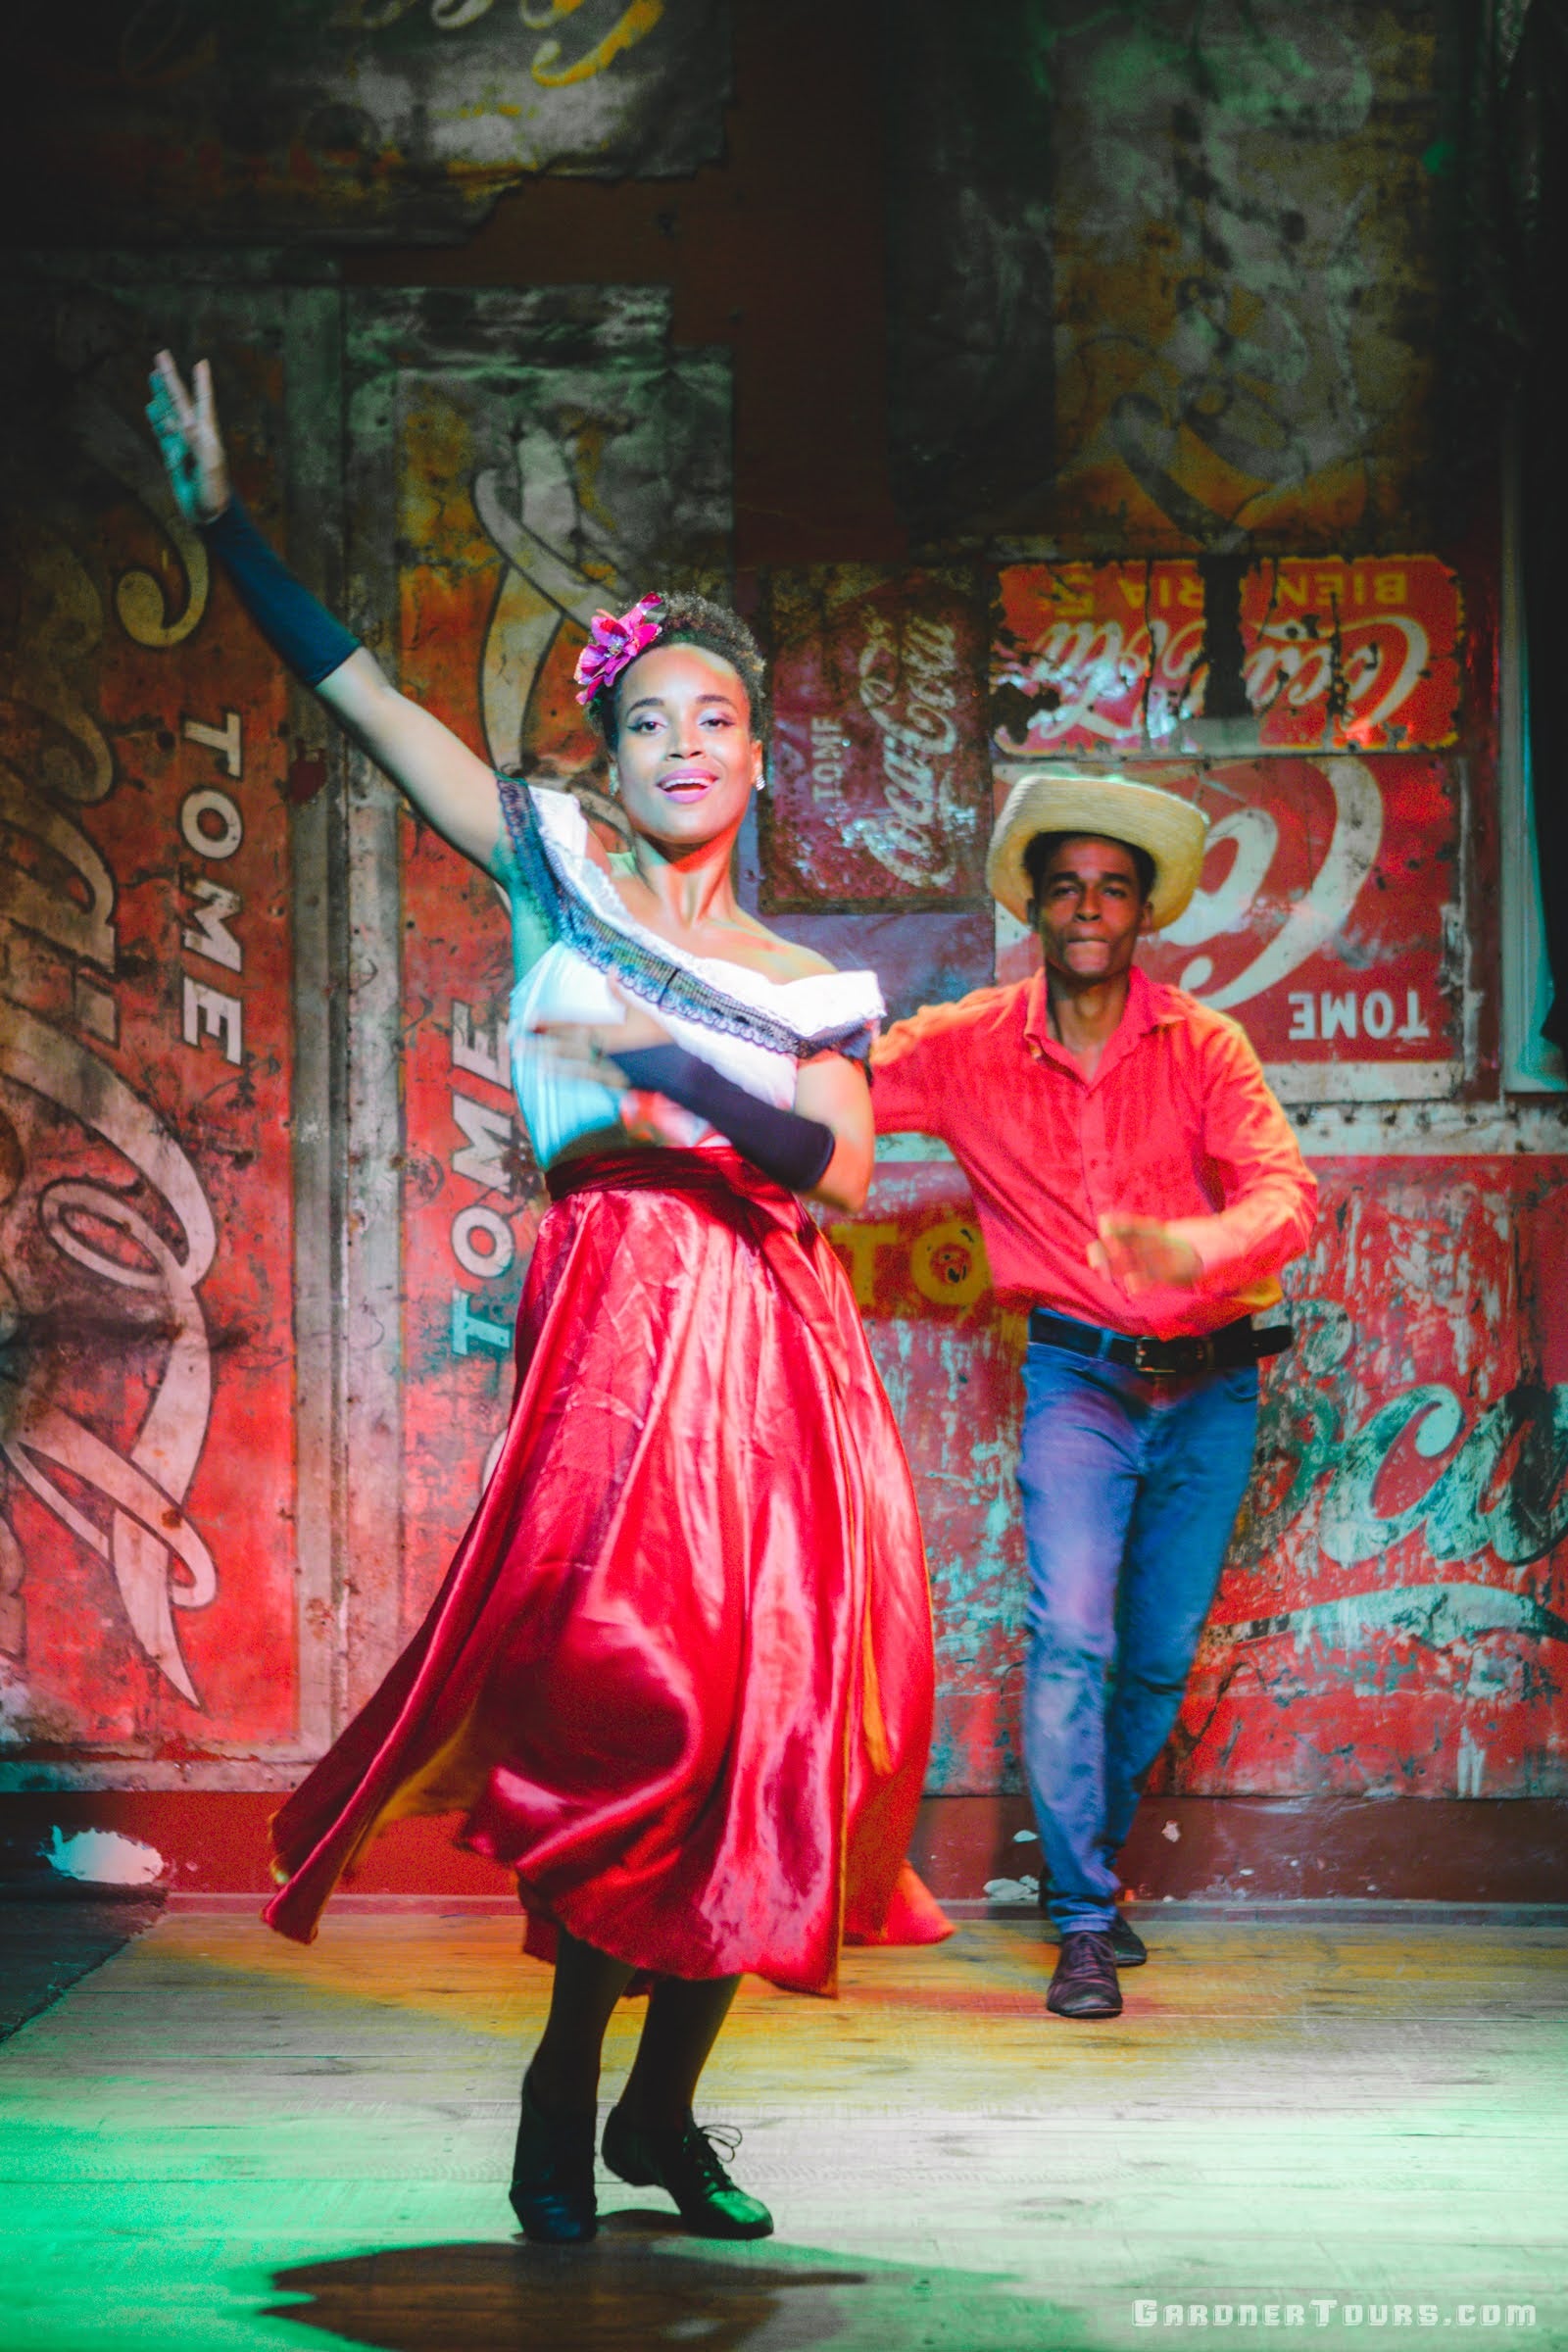 A Guajira and Guajiro Dancing to Chan Chan by Buena Vista Social Club at Casa Miglis' Private Show by Havana Queens in Central Havana, Cuba